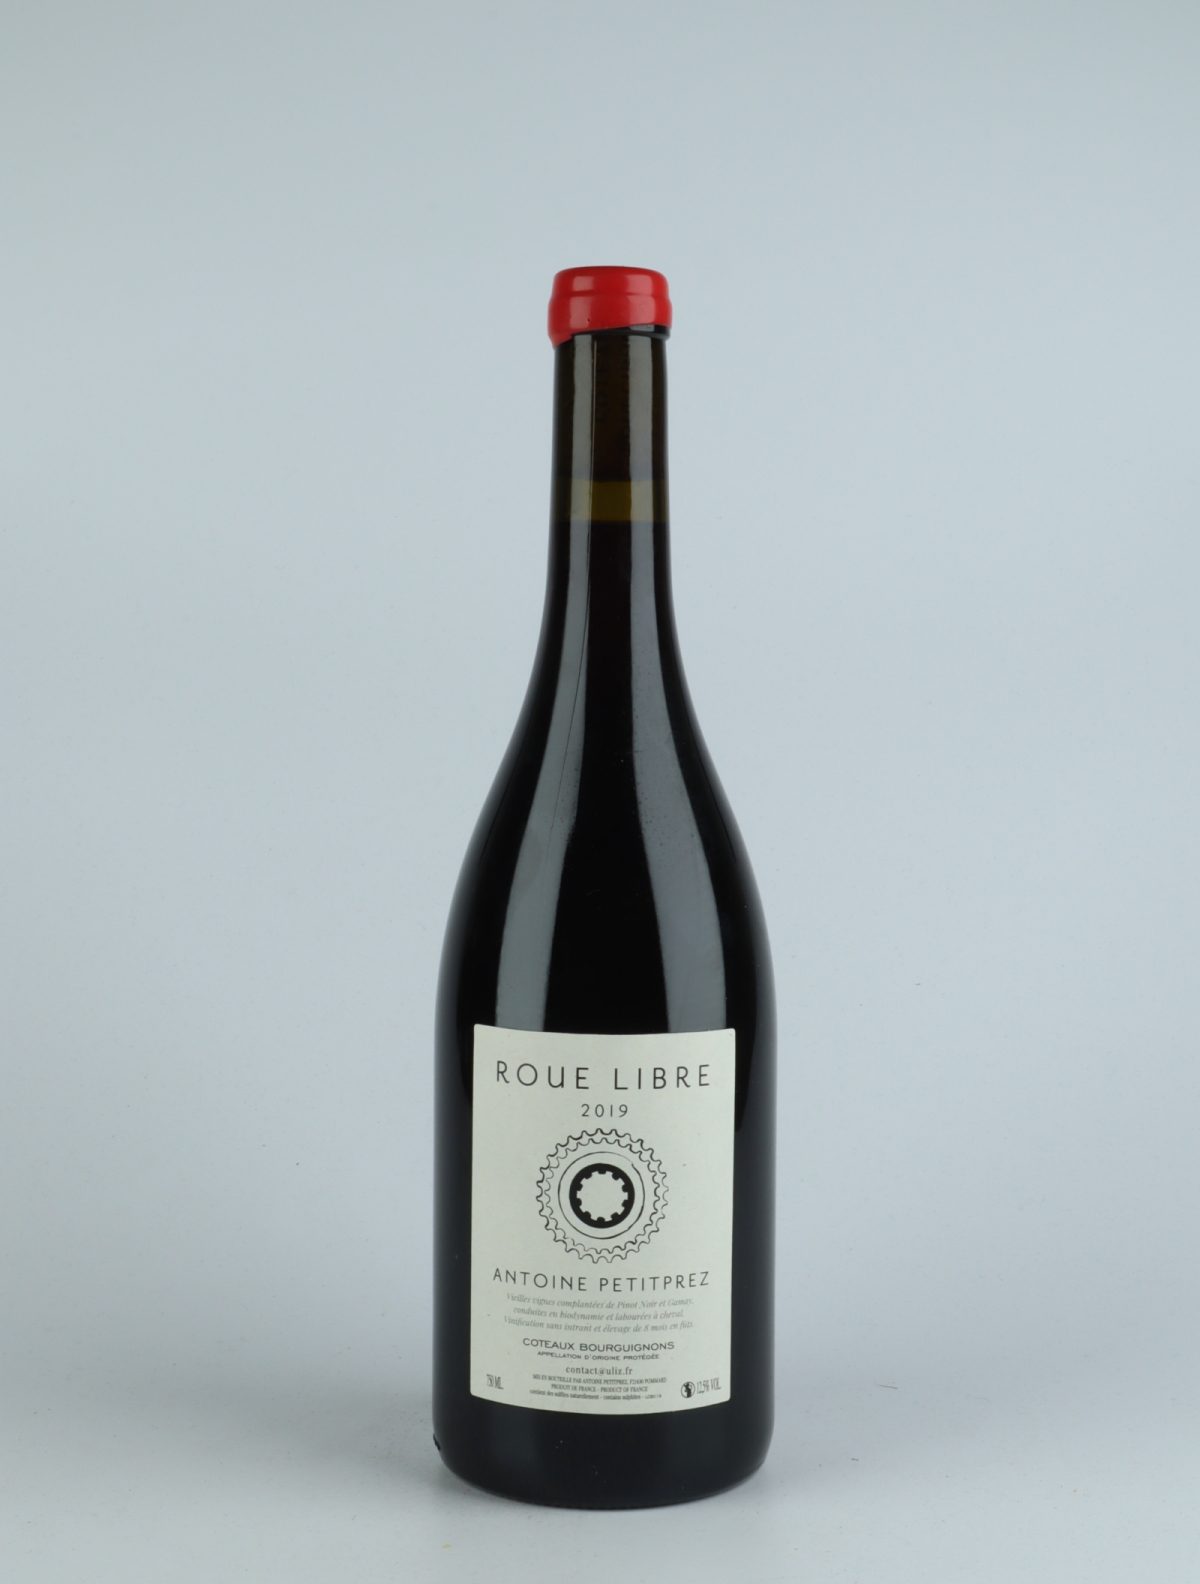 A bottle 2019 Coteaux Bourguignons - Roue Libre Red wine from Antoine Petitprez, Burgundy in France